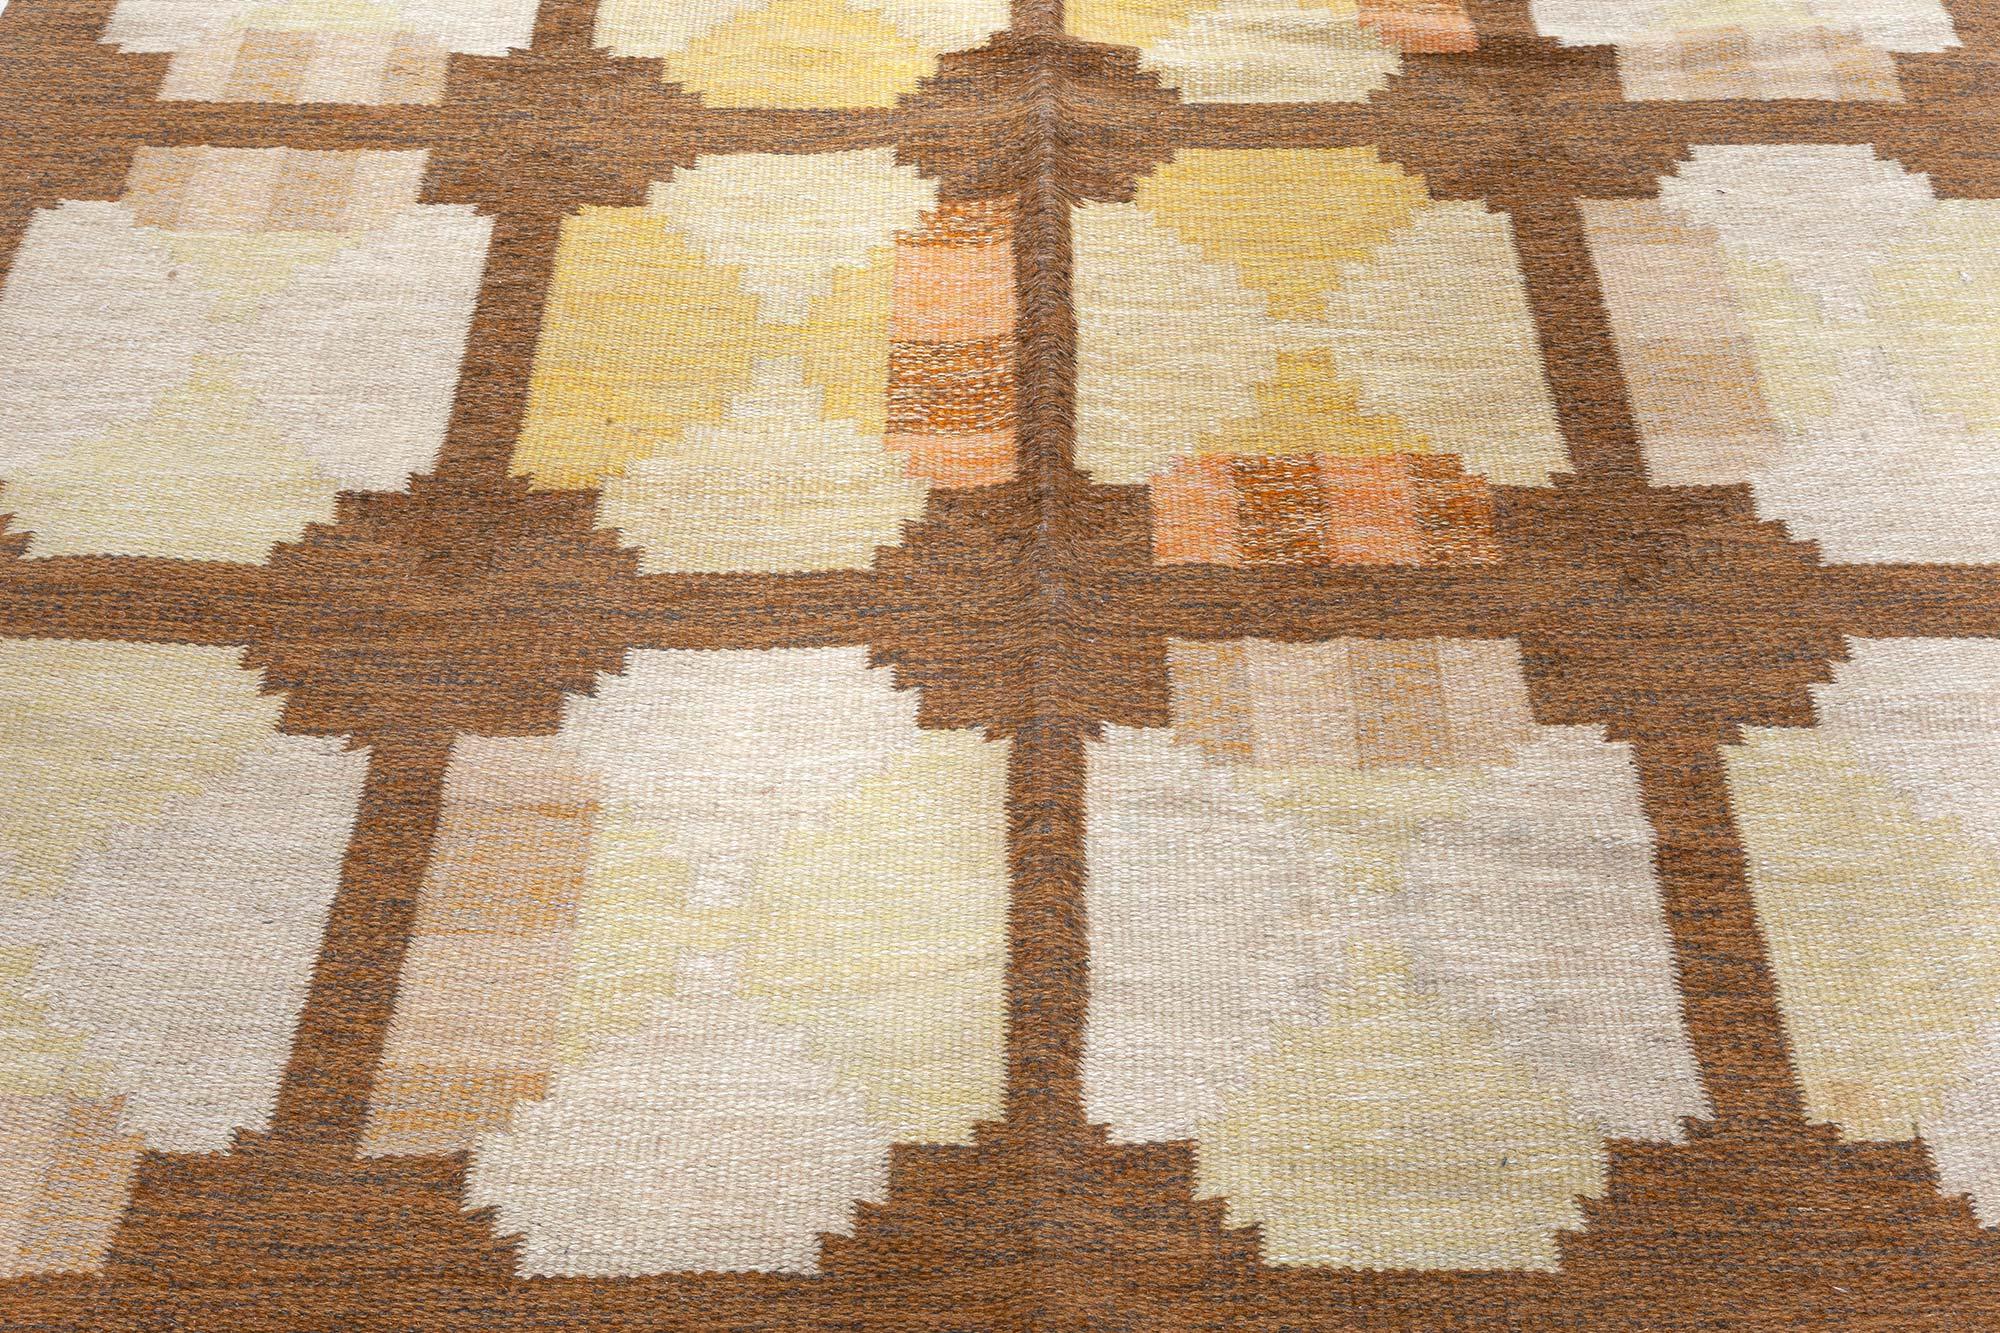 Mid-20th century Swedish Geometric yellow, orange and brown flat-weave wool rug
Size: 6'5